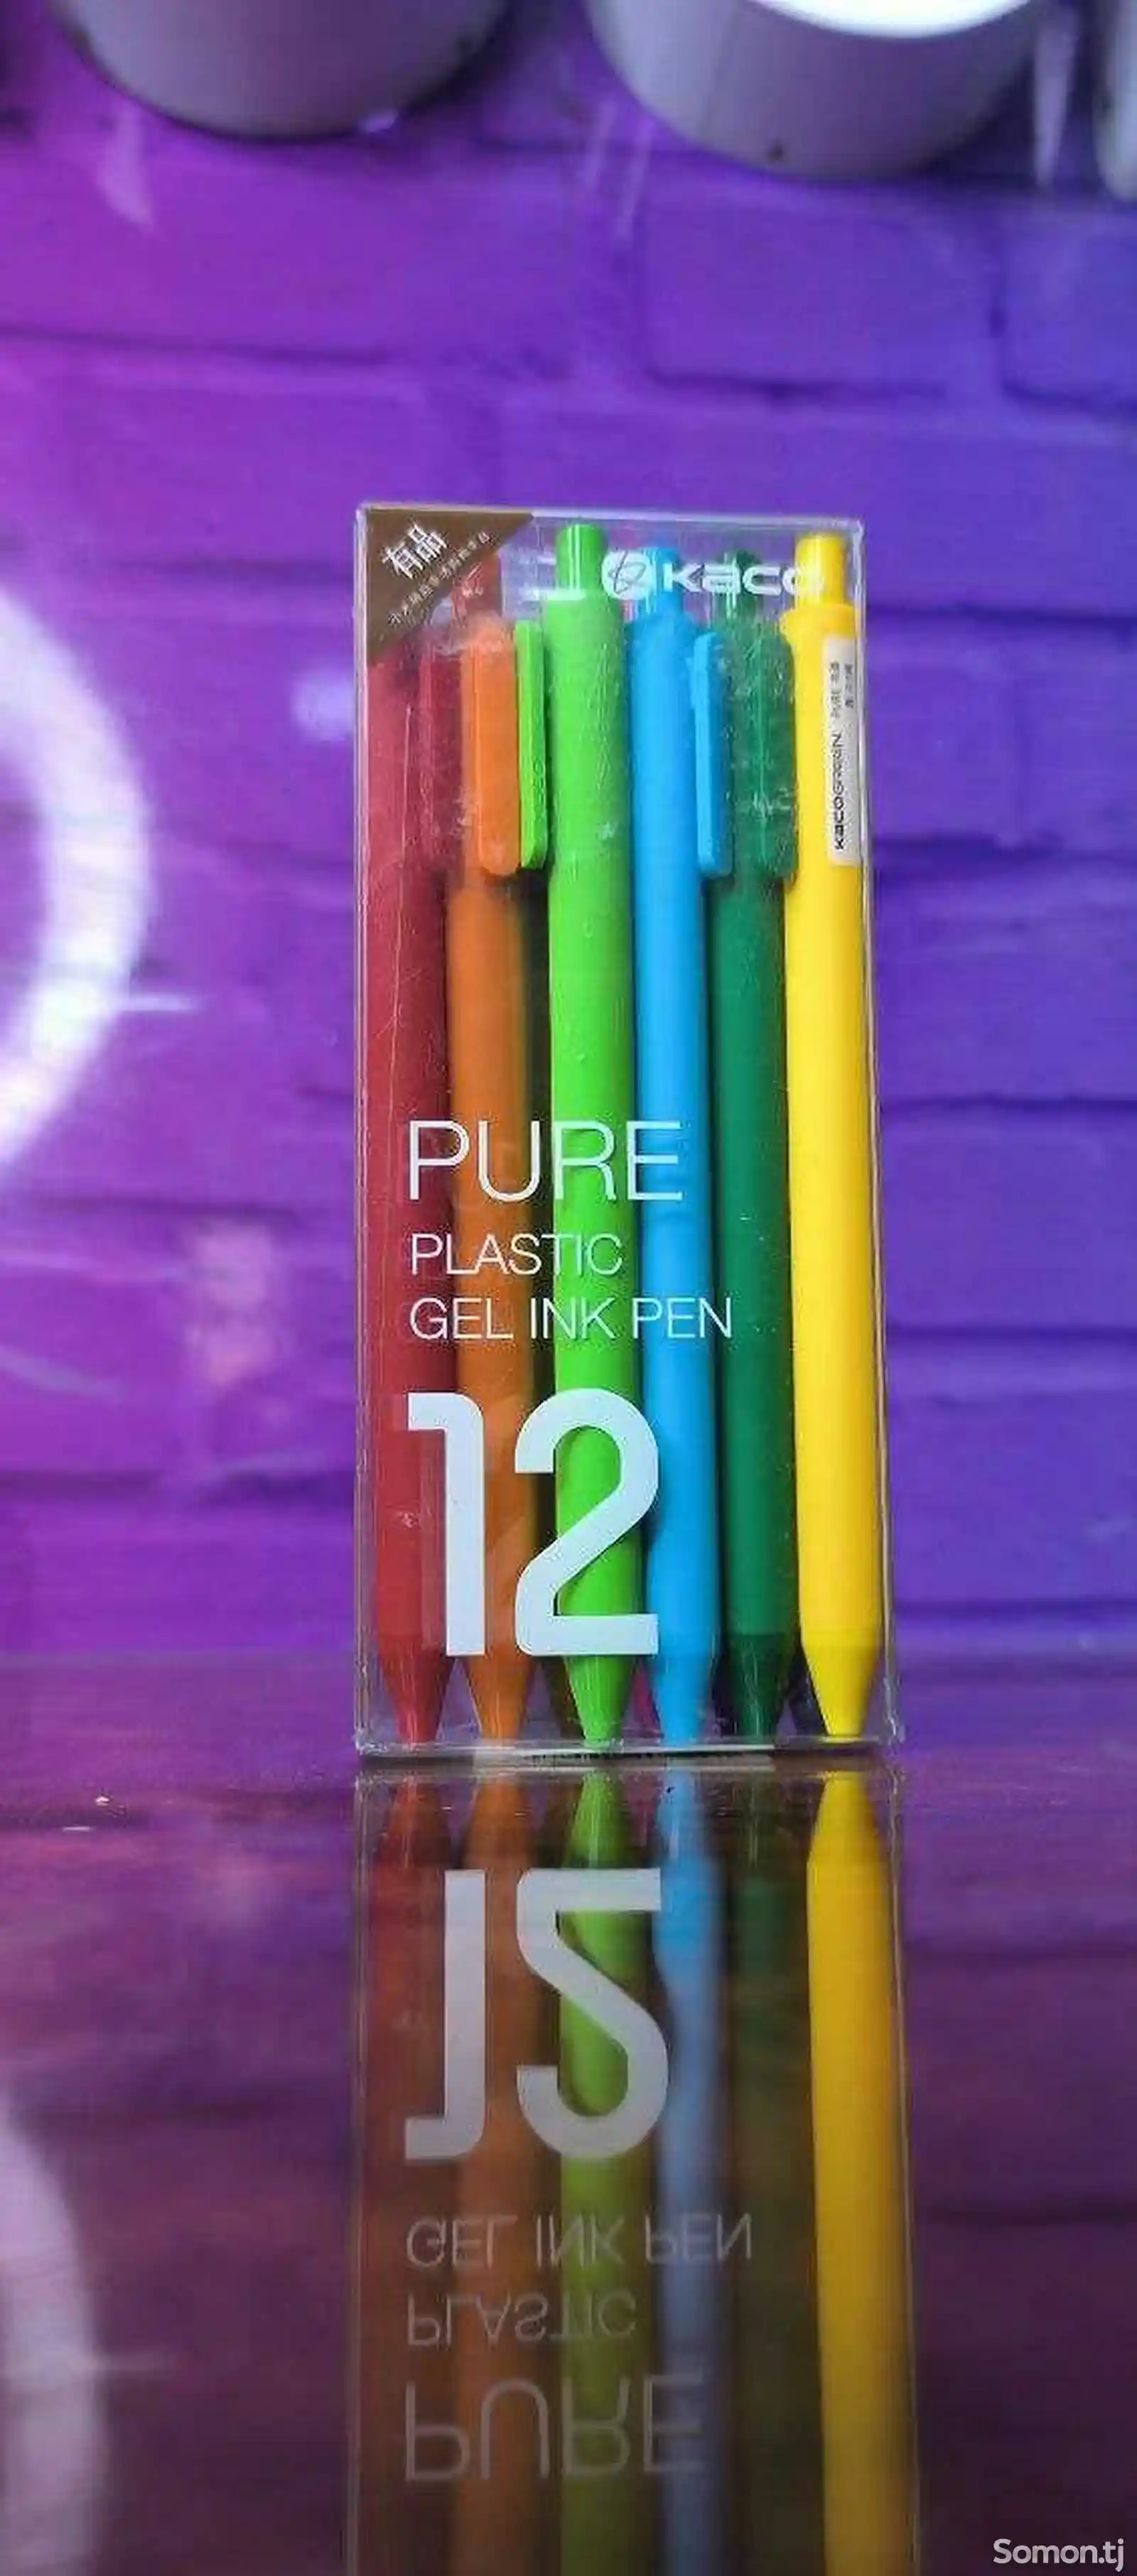 Kaco Pure Plastic Gelic Pen Комплект гелевых ручек 12 штук-1